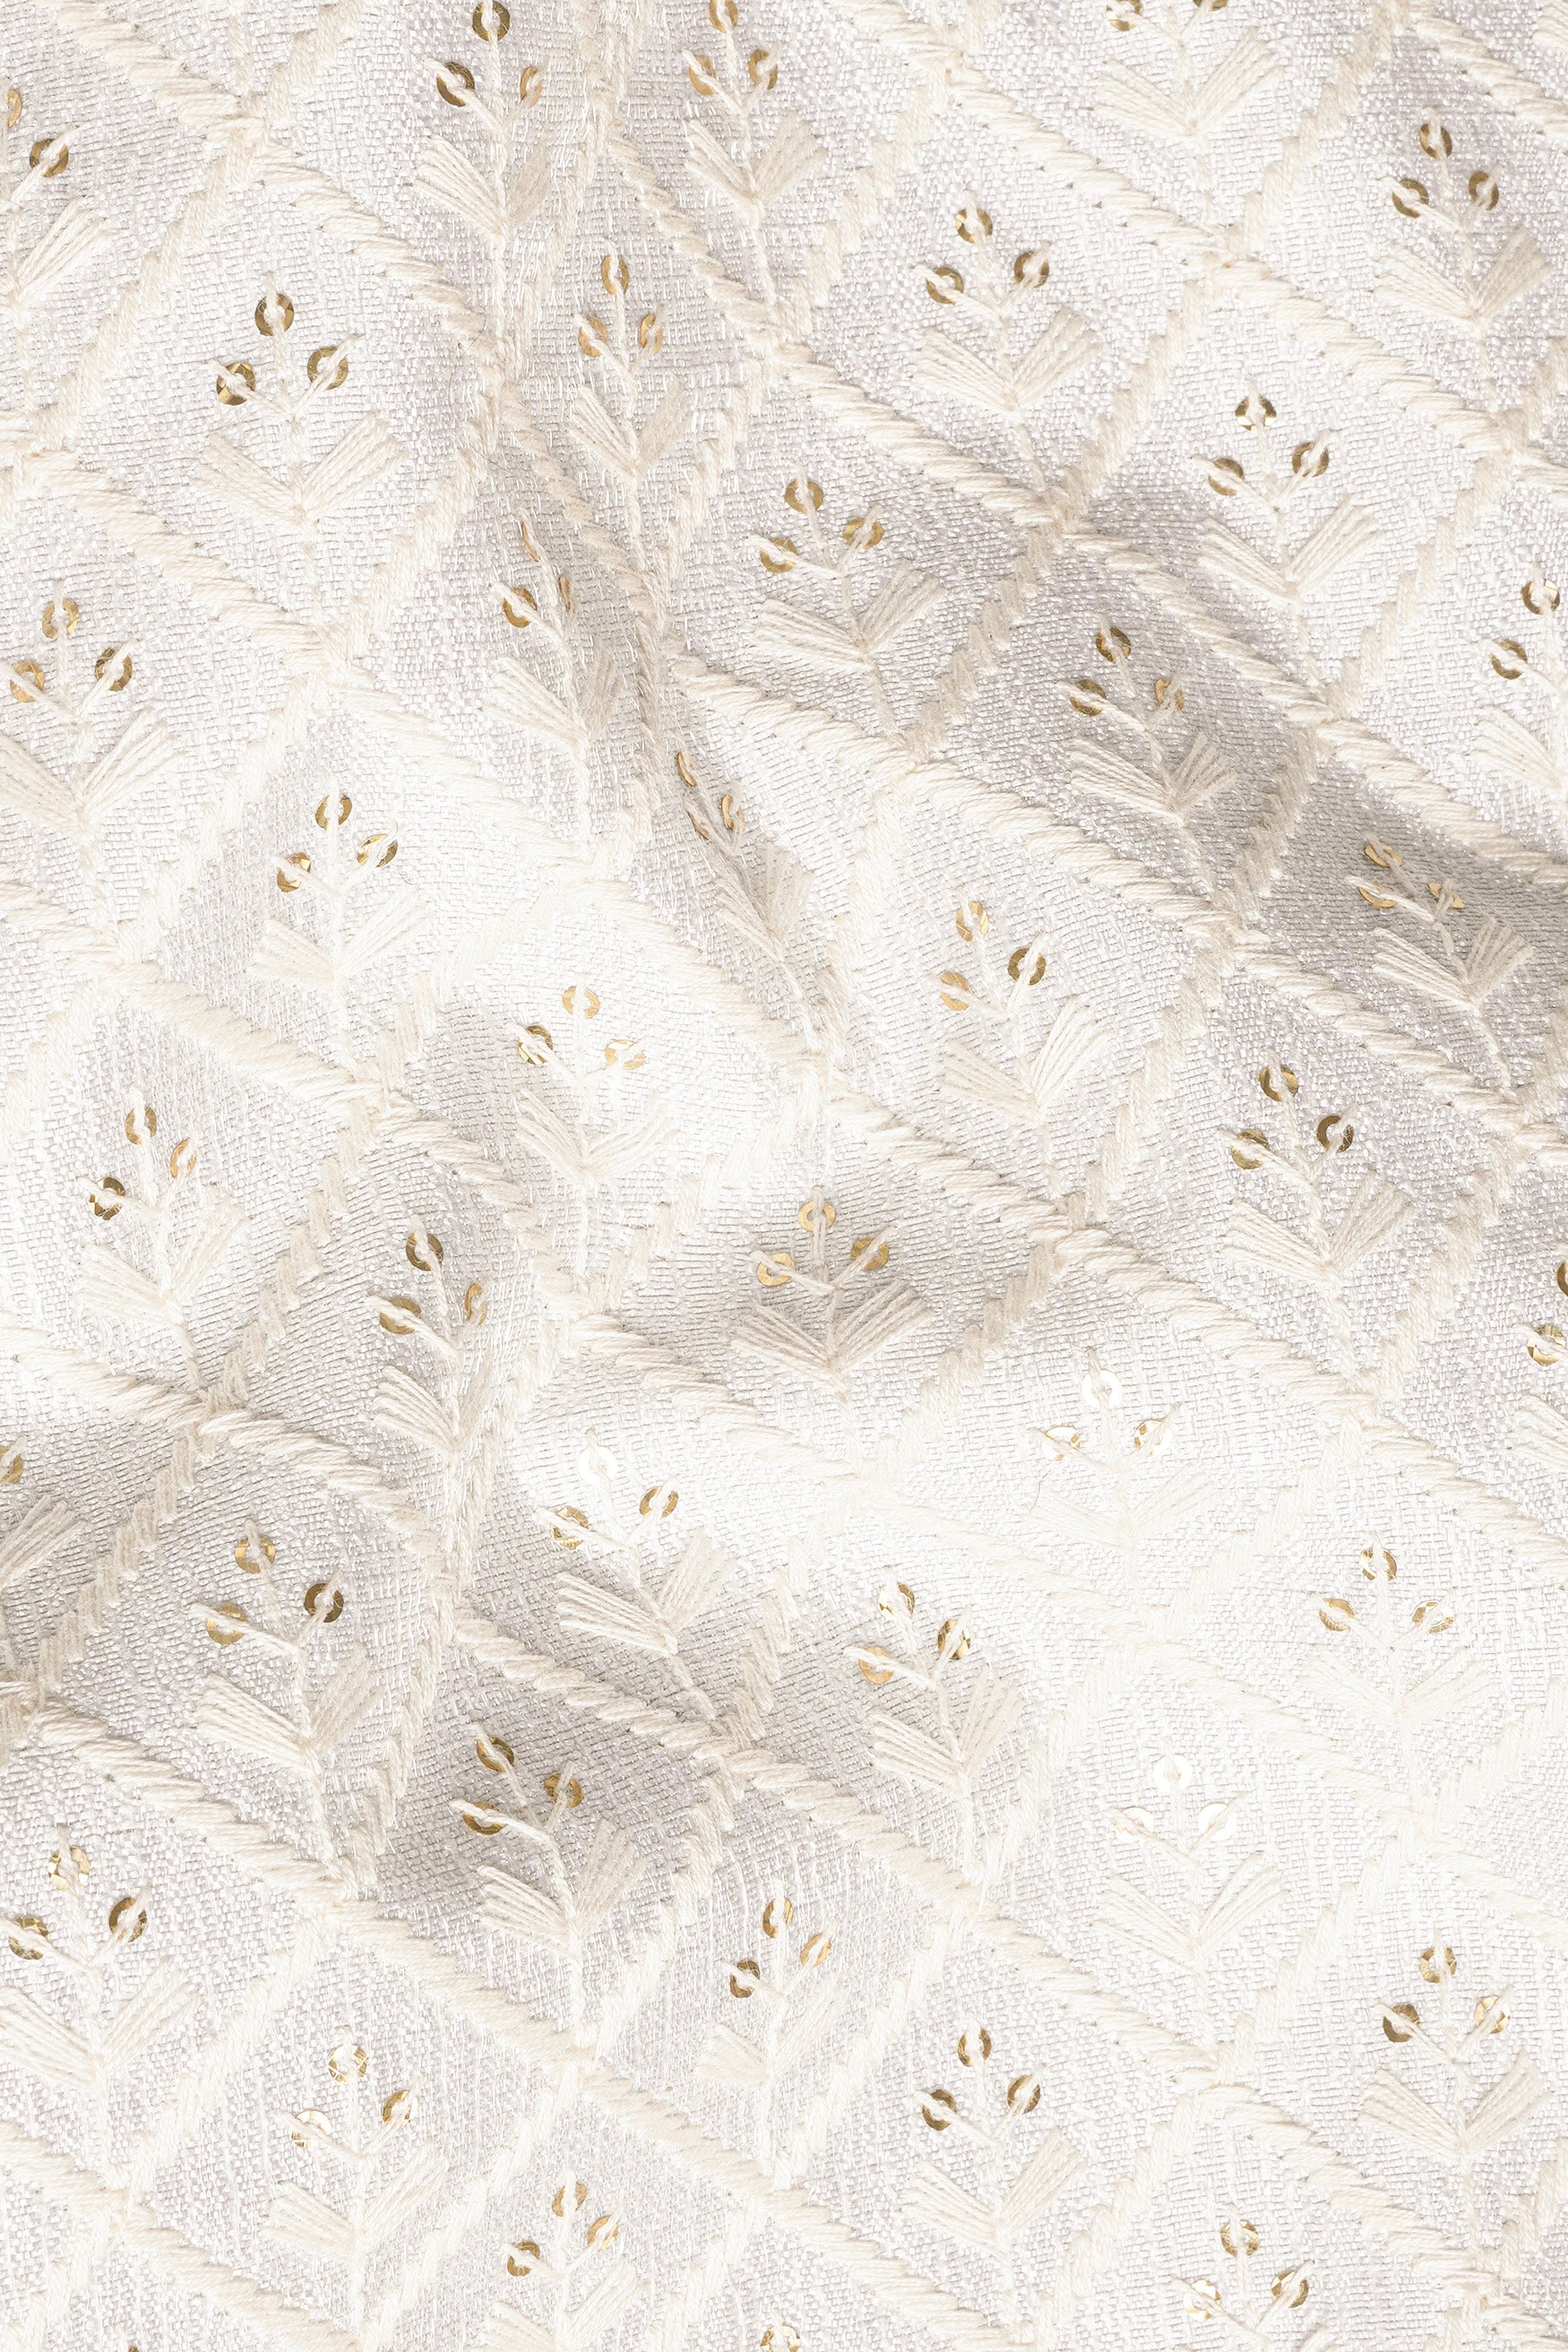 Bright White and Bone Beige Geometric Thread and Sequin Embroidered Jodhpuri Set